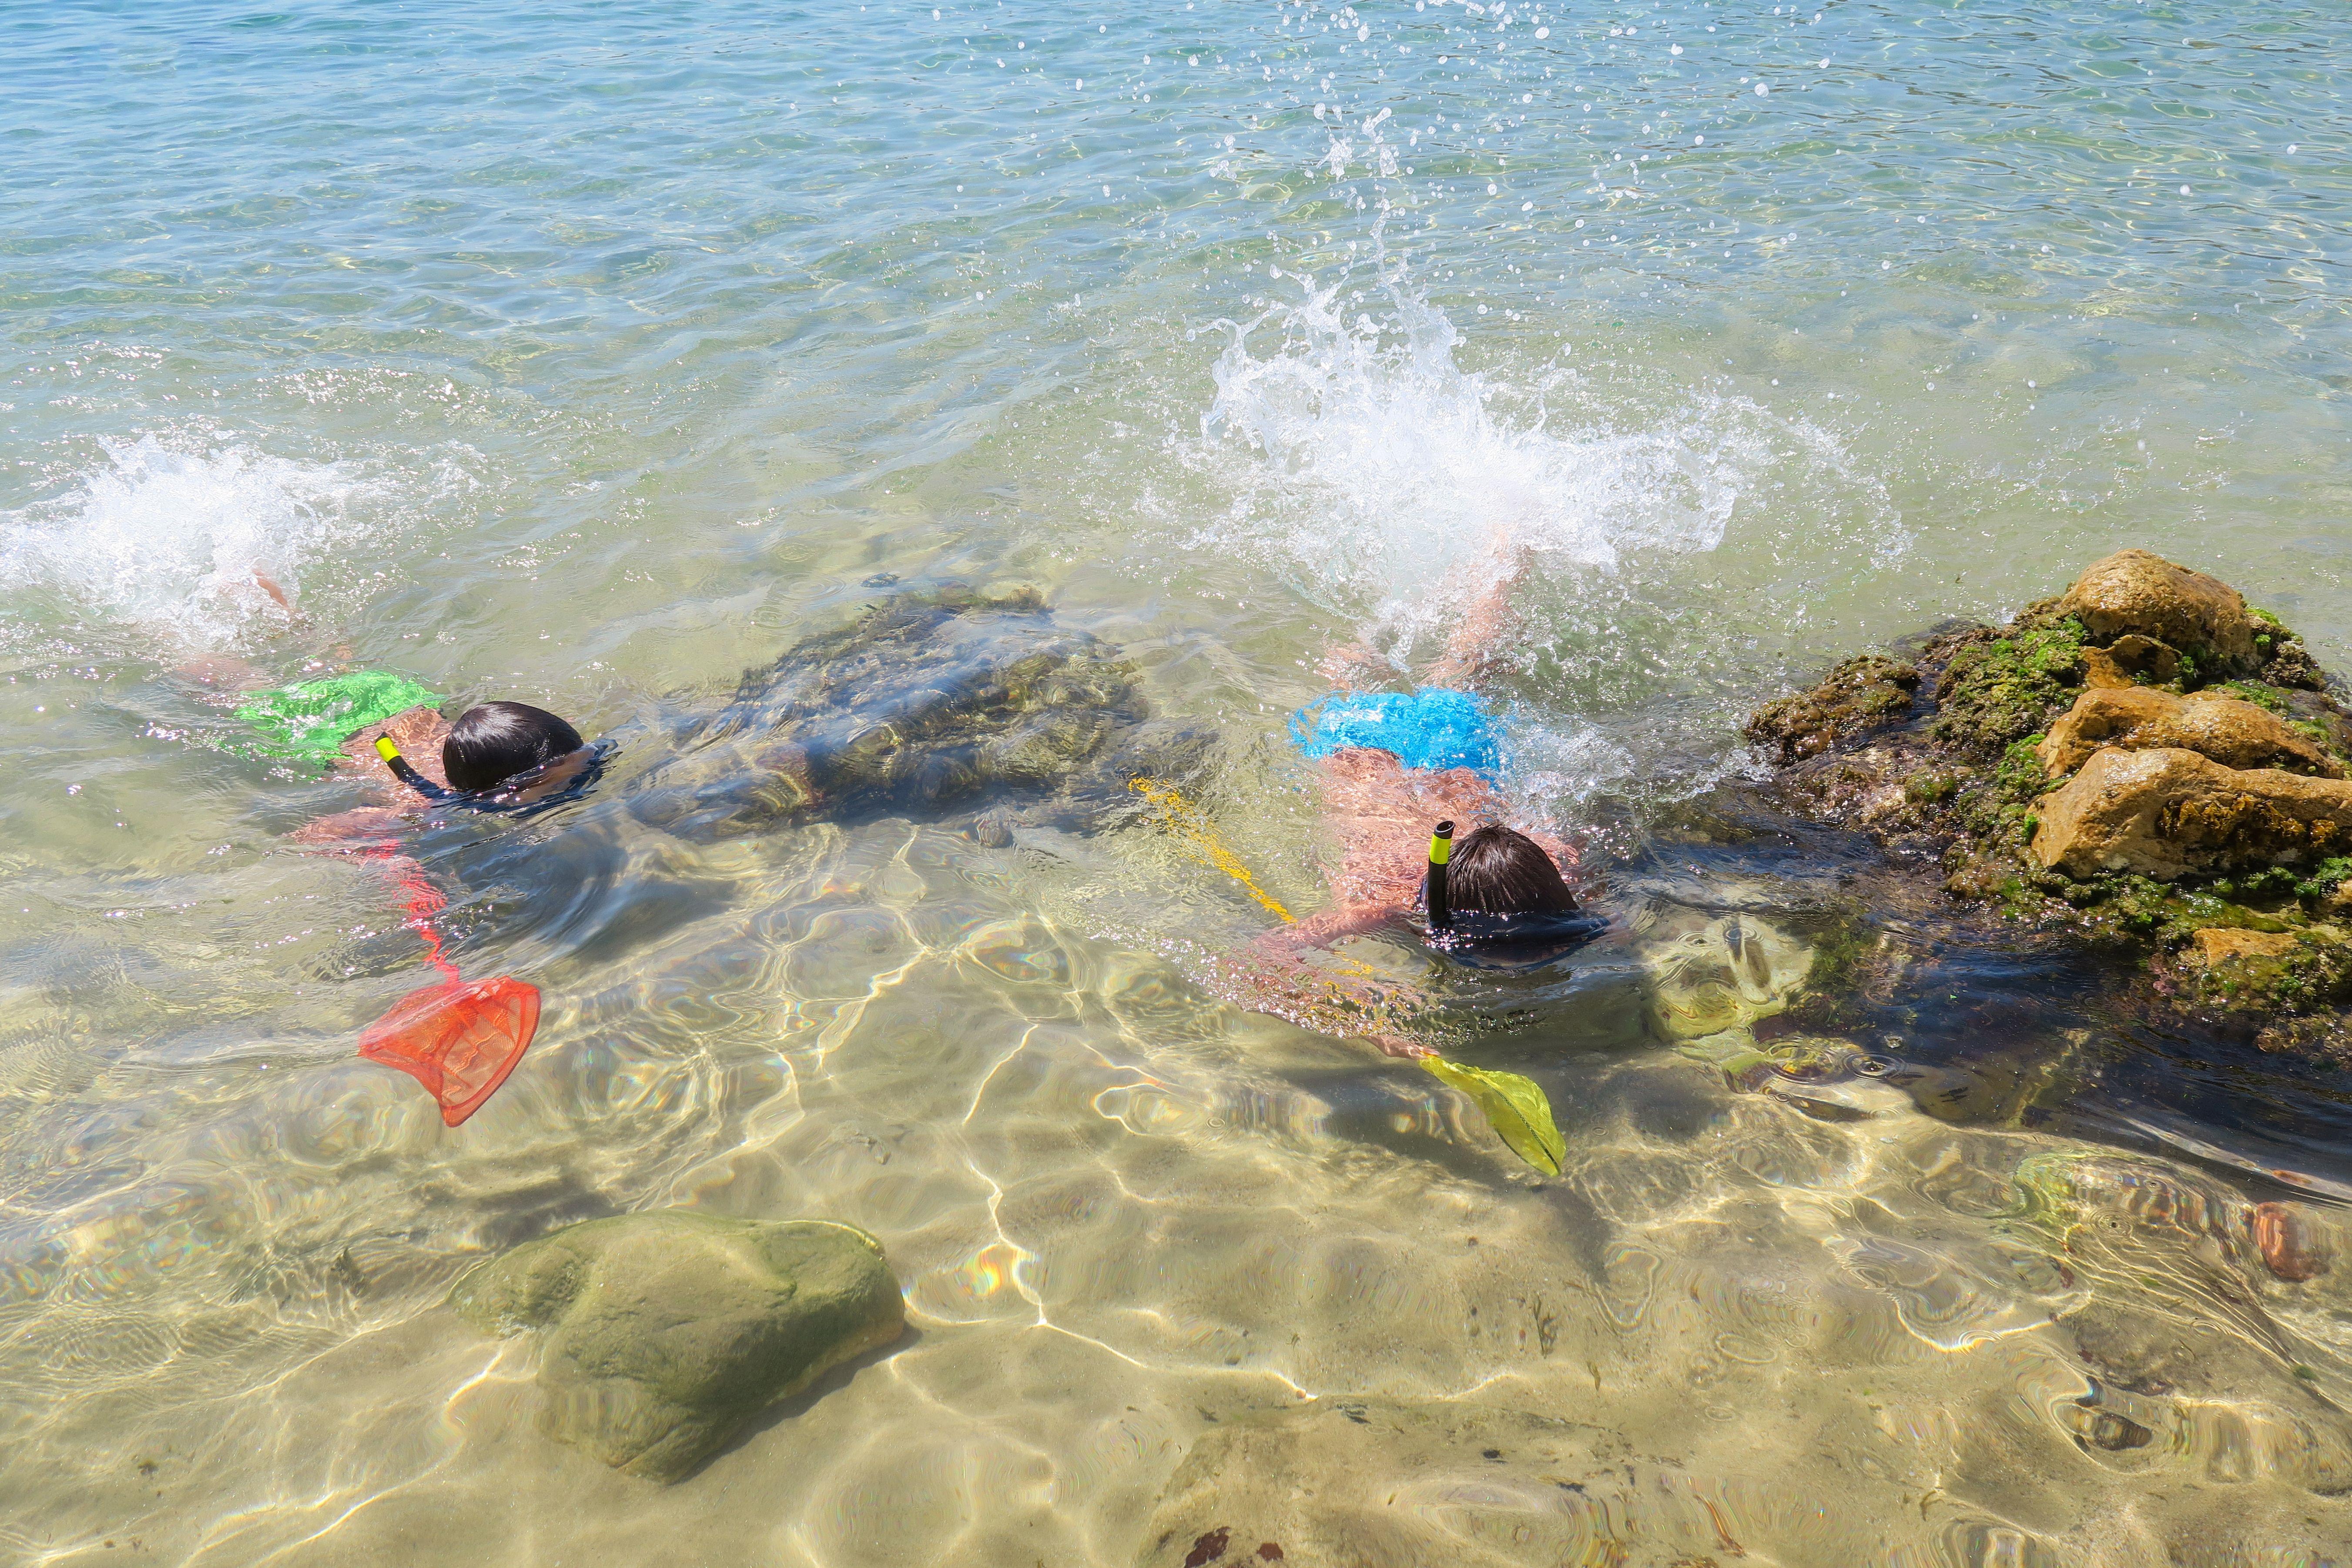 Costa Brava snorkelling